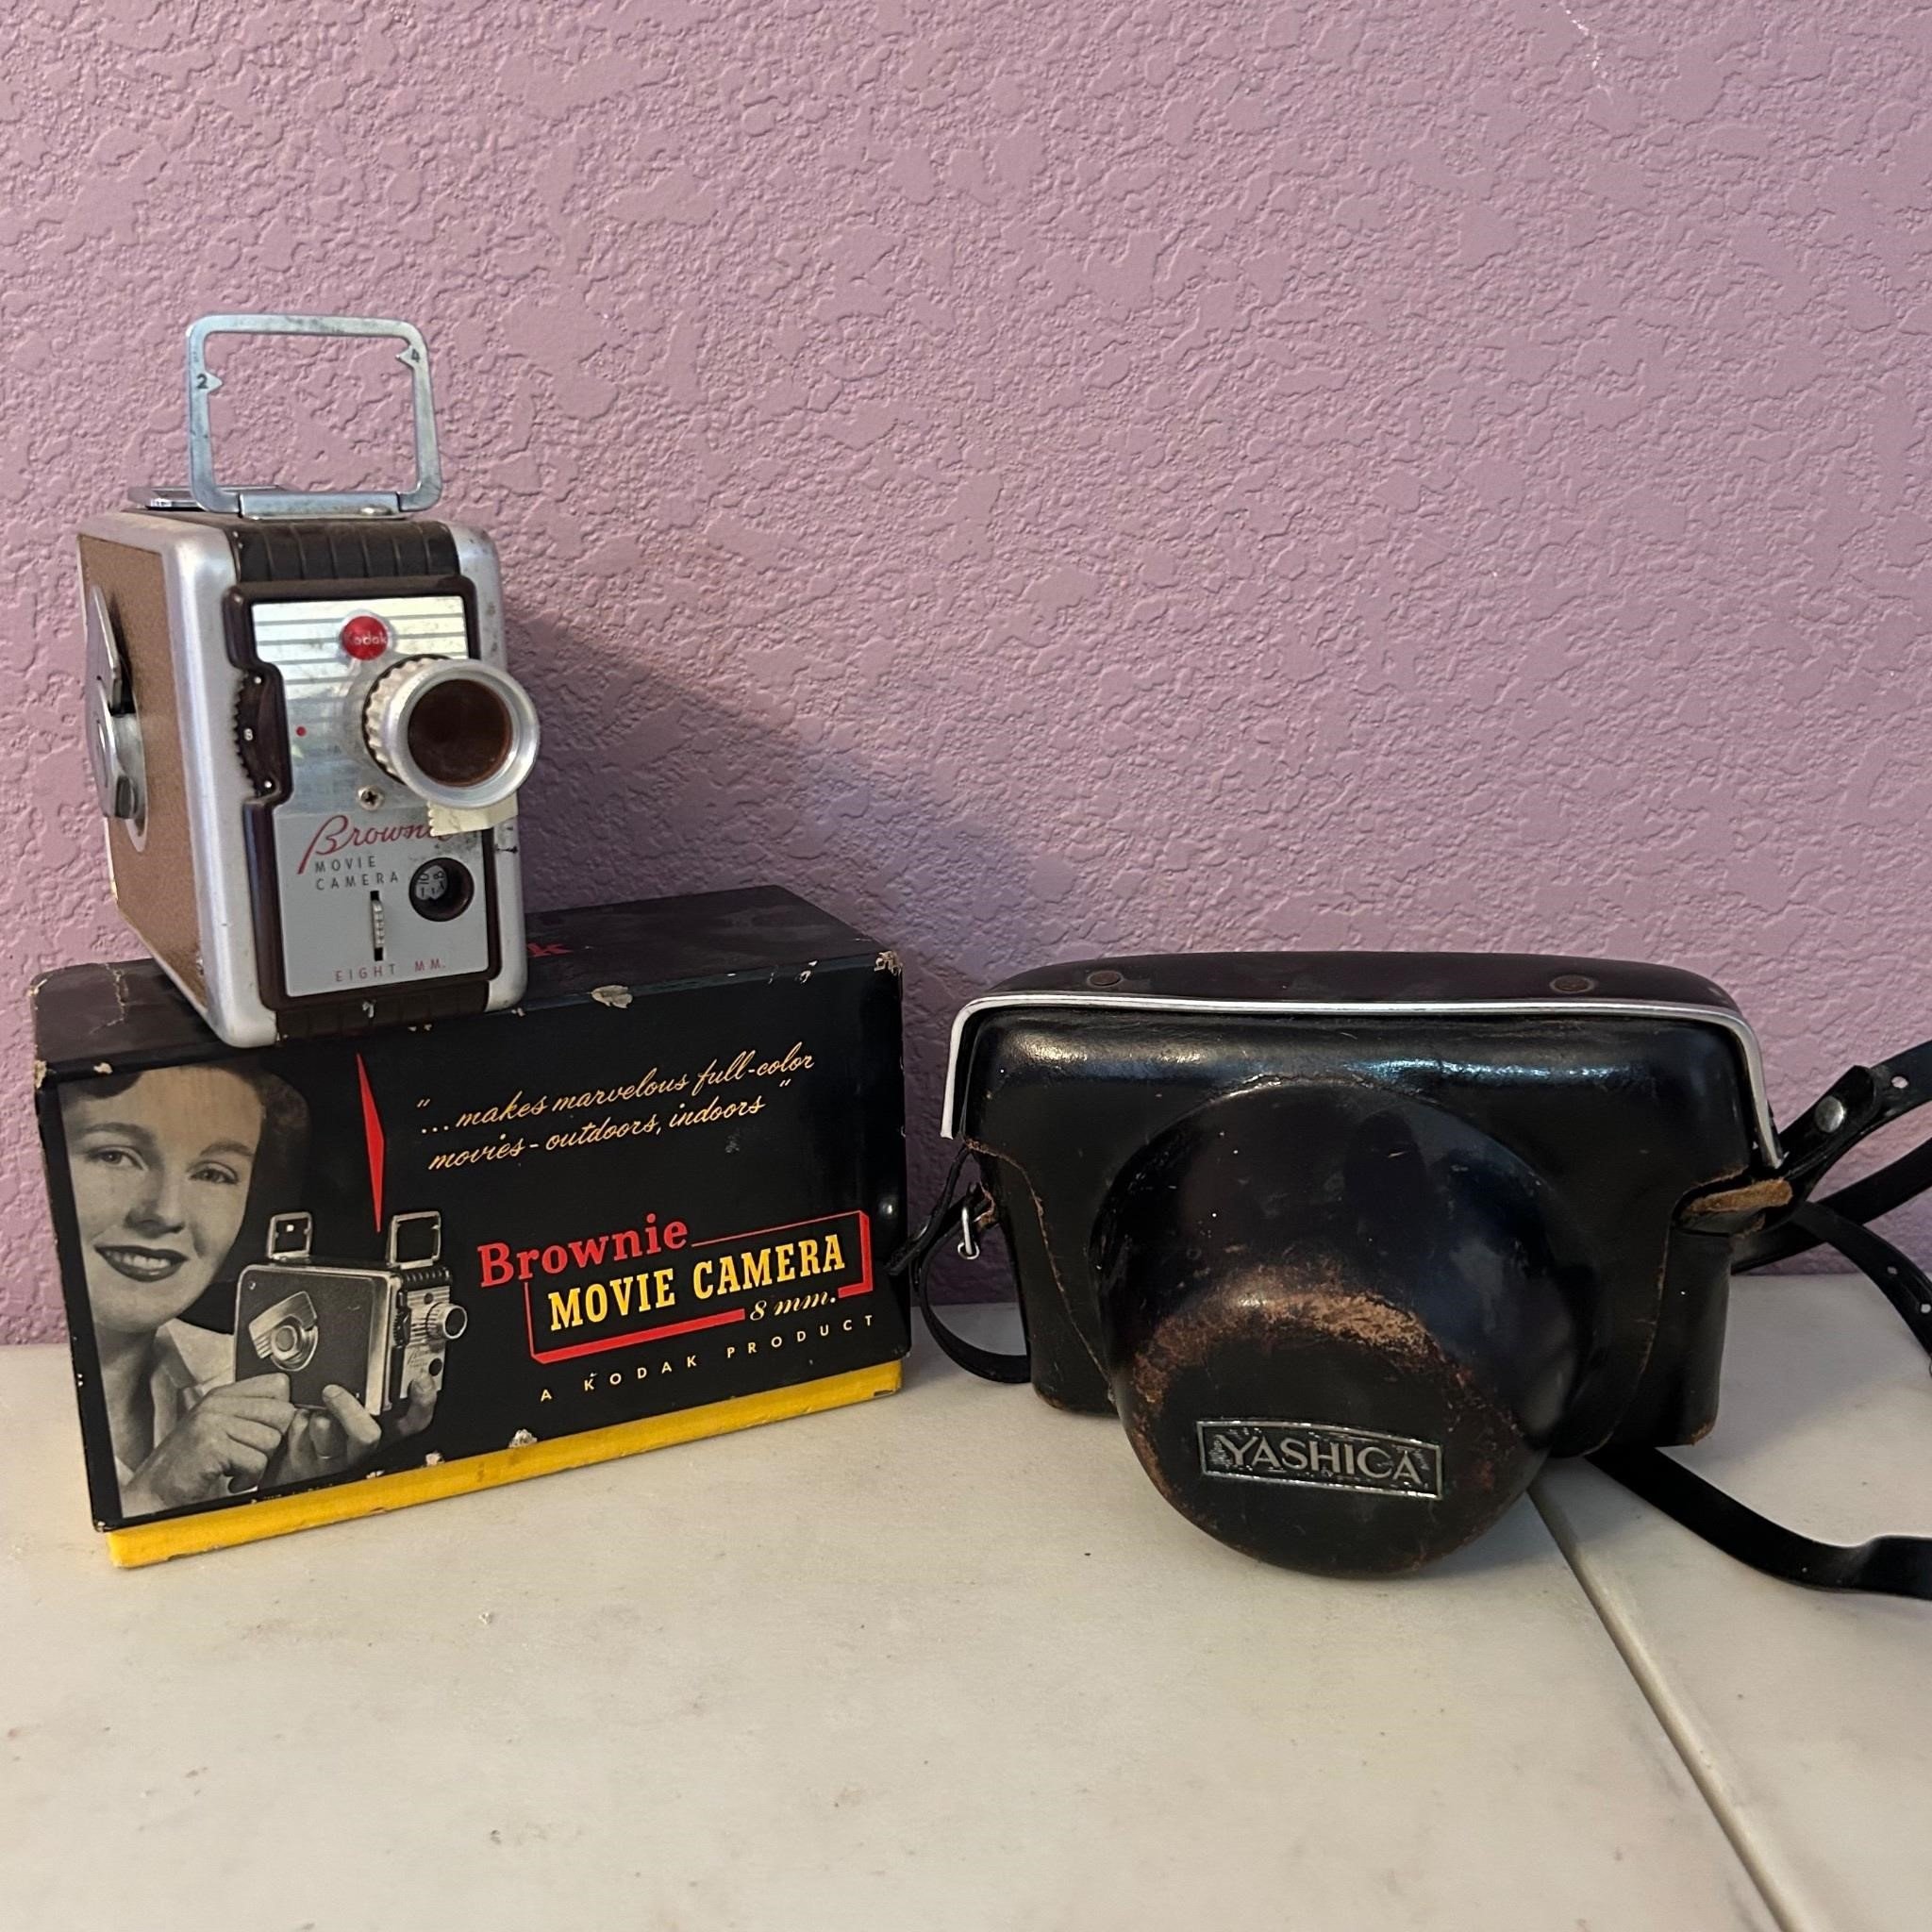 Brownie Kodak Movie Camera, Yashica Camera